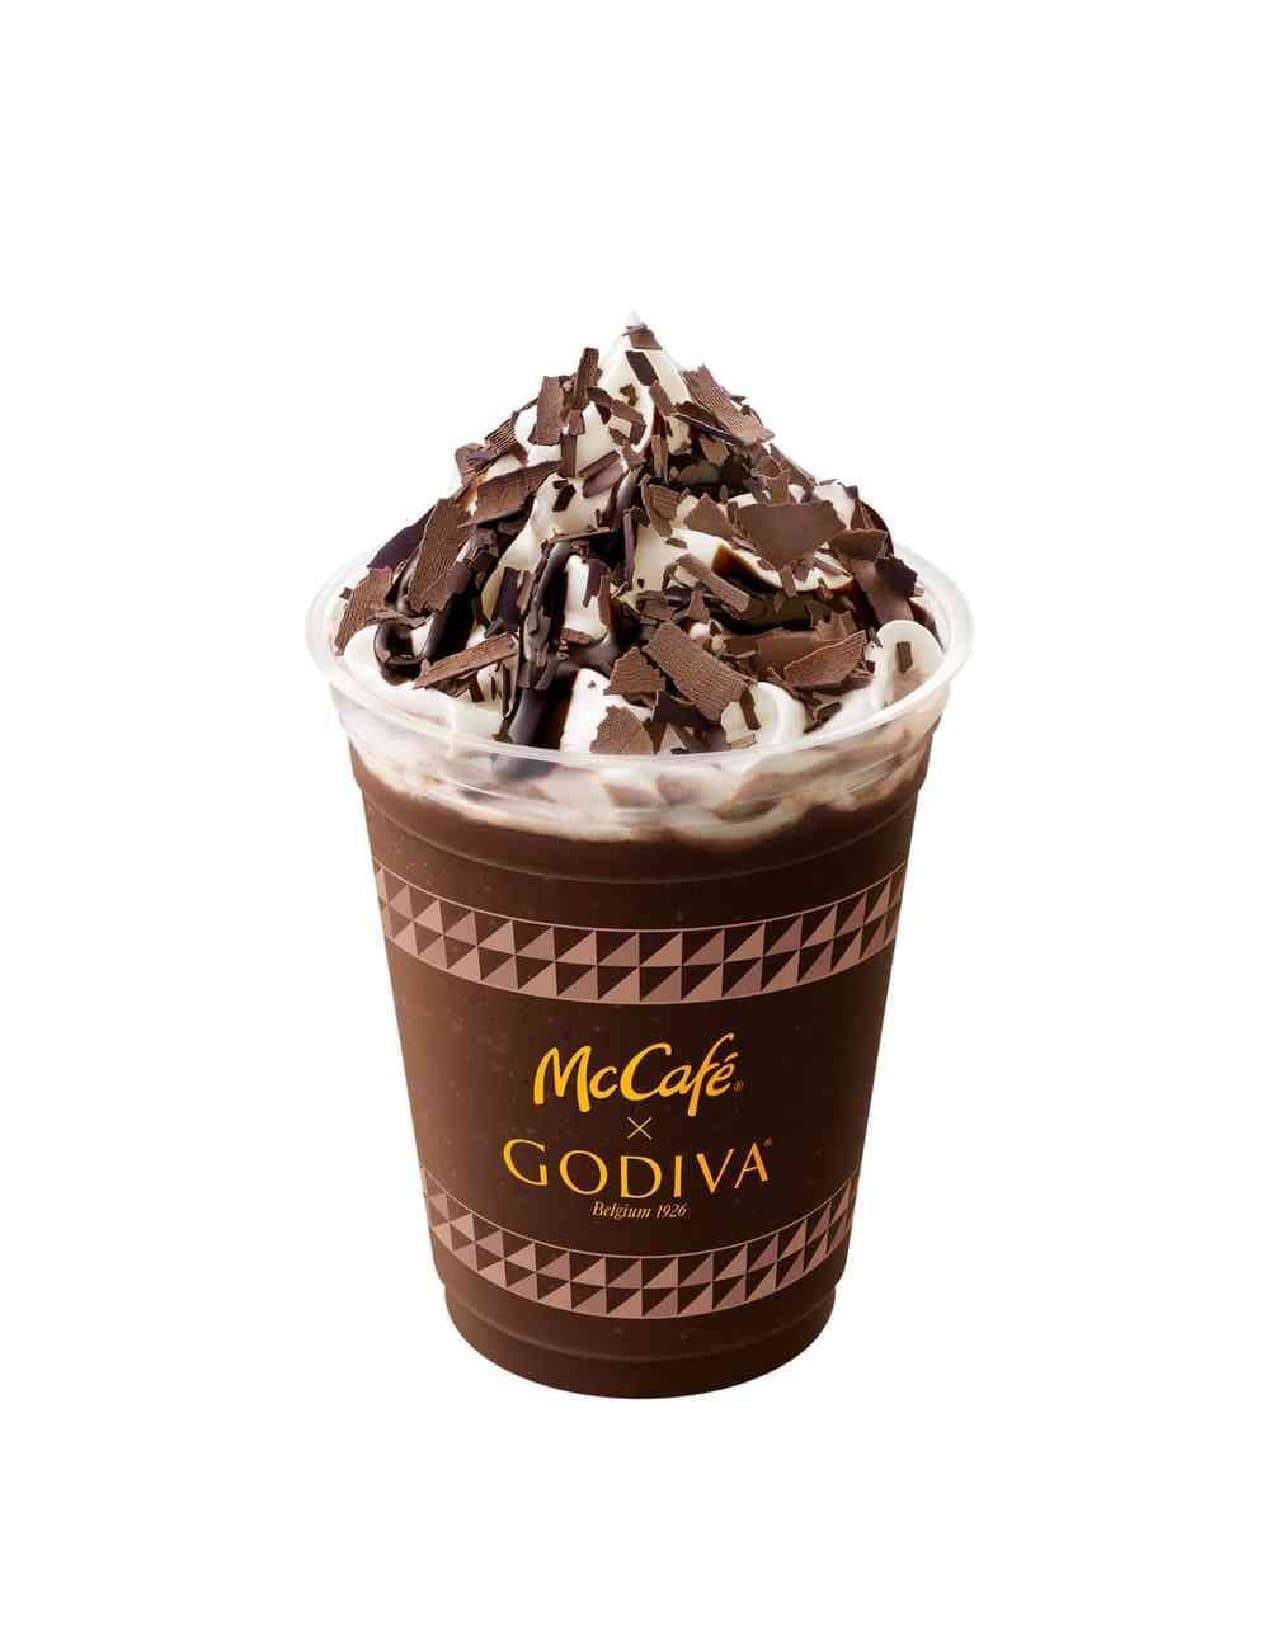 Mac Cafe "Godiva Chocolate Frappe".